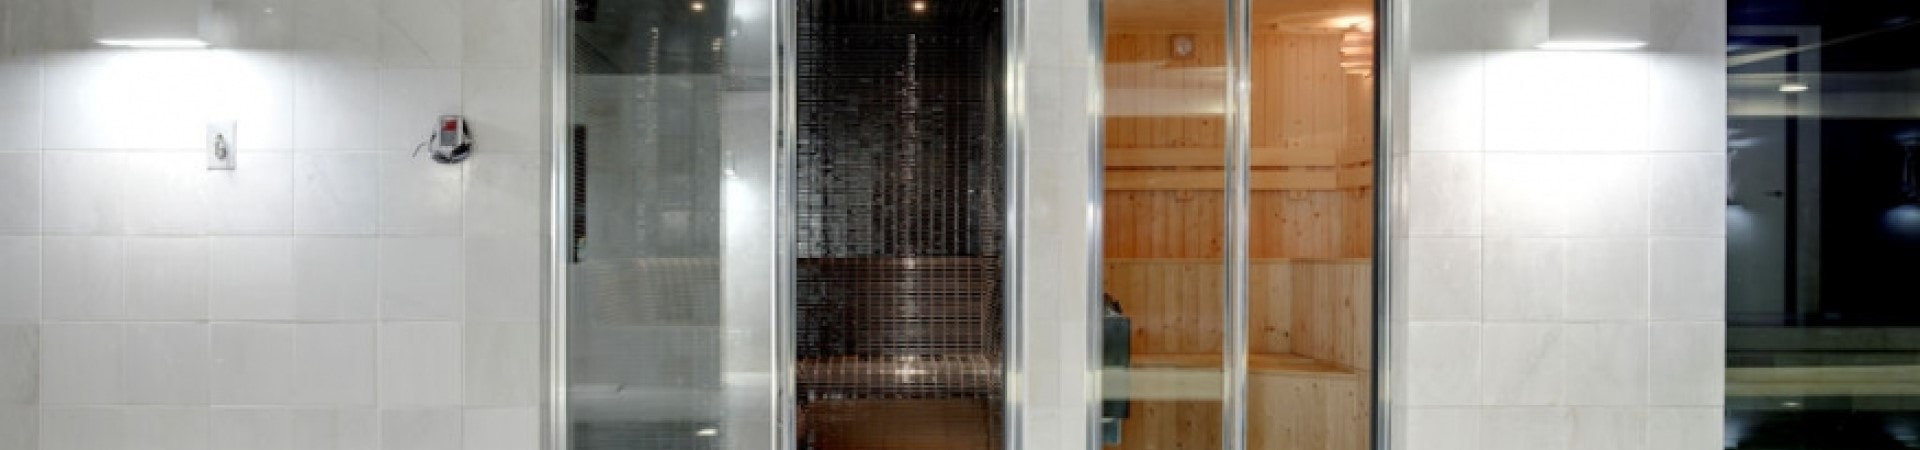 Impression Sauna Banner